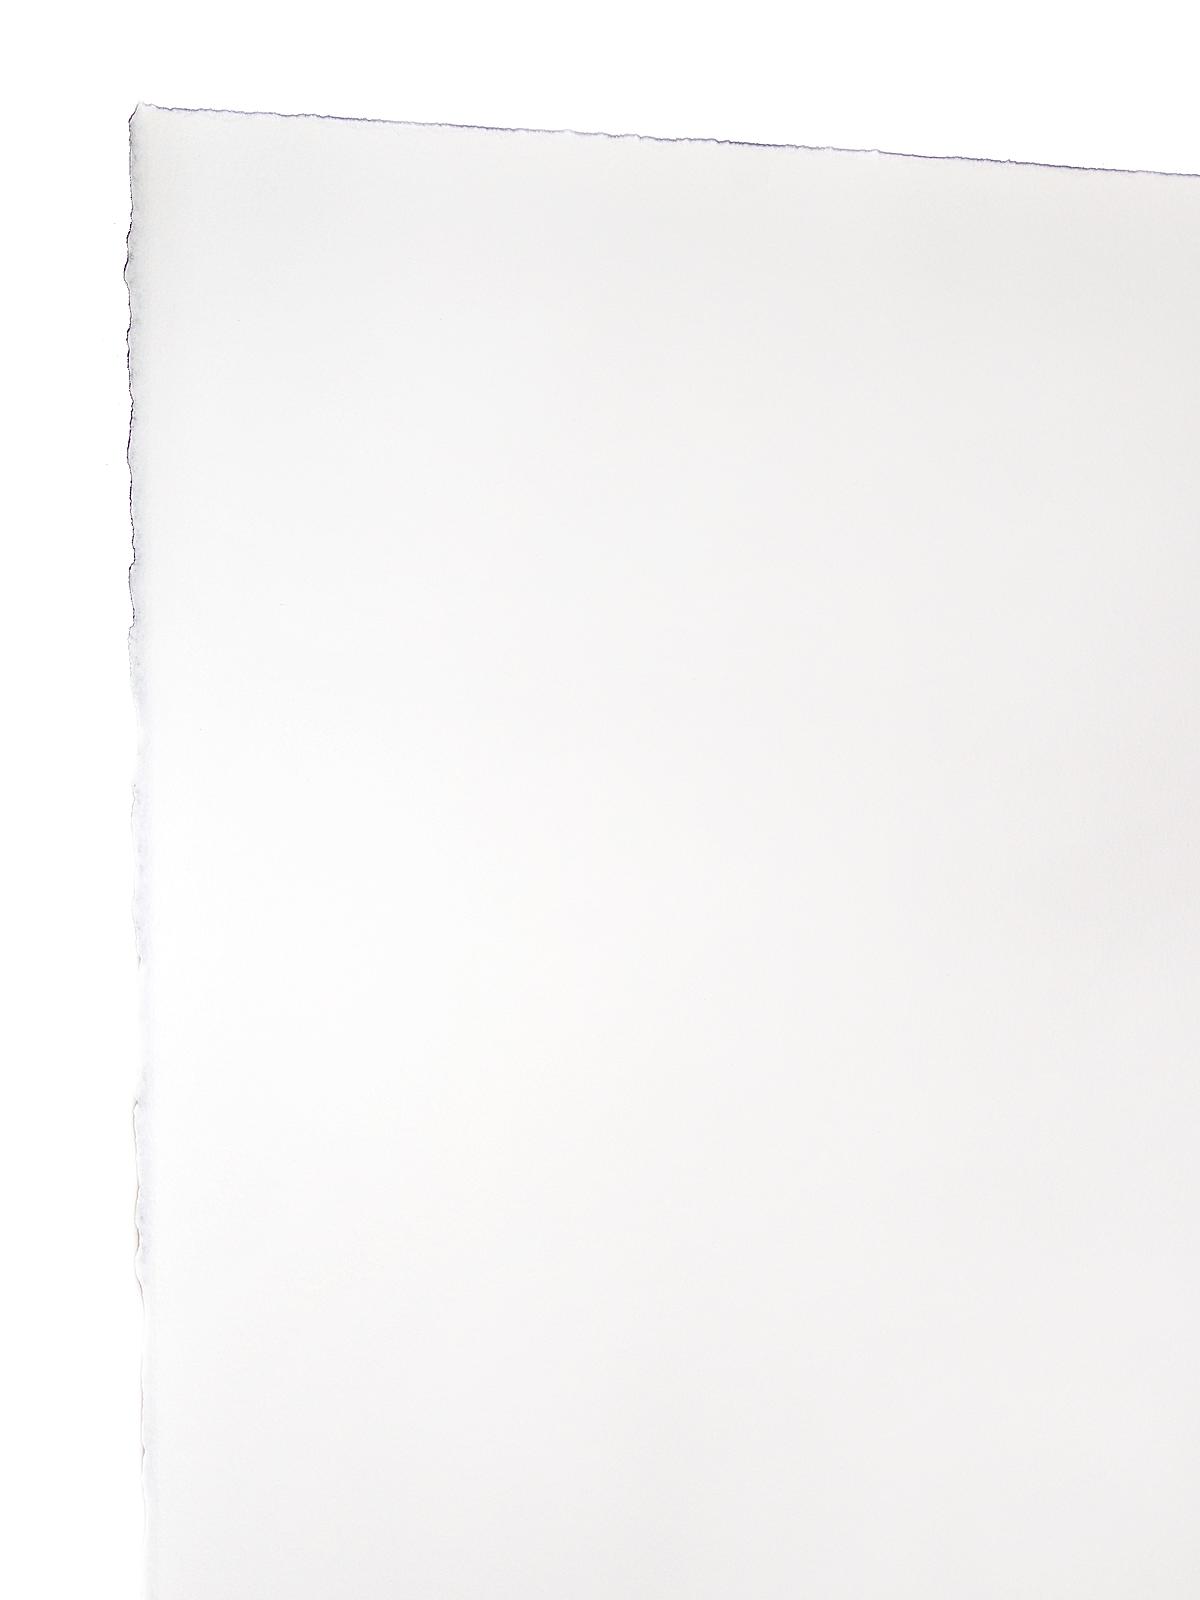 Rives Bfk Printmaking Paper 30 In. X 44 In. Sheet White 280 Gm